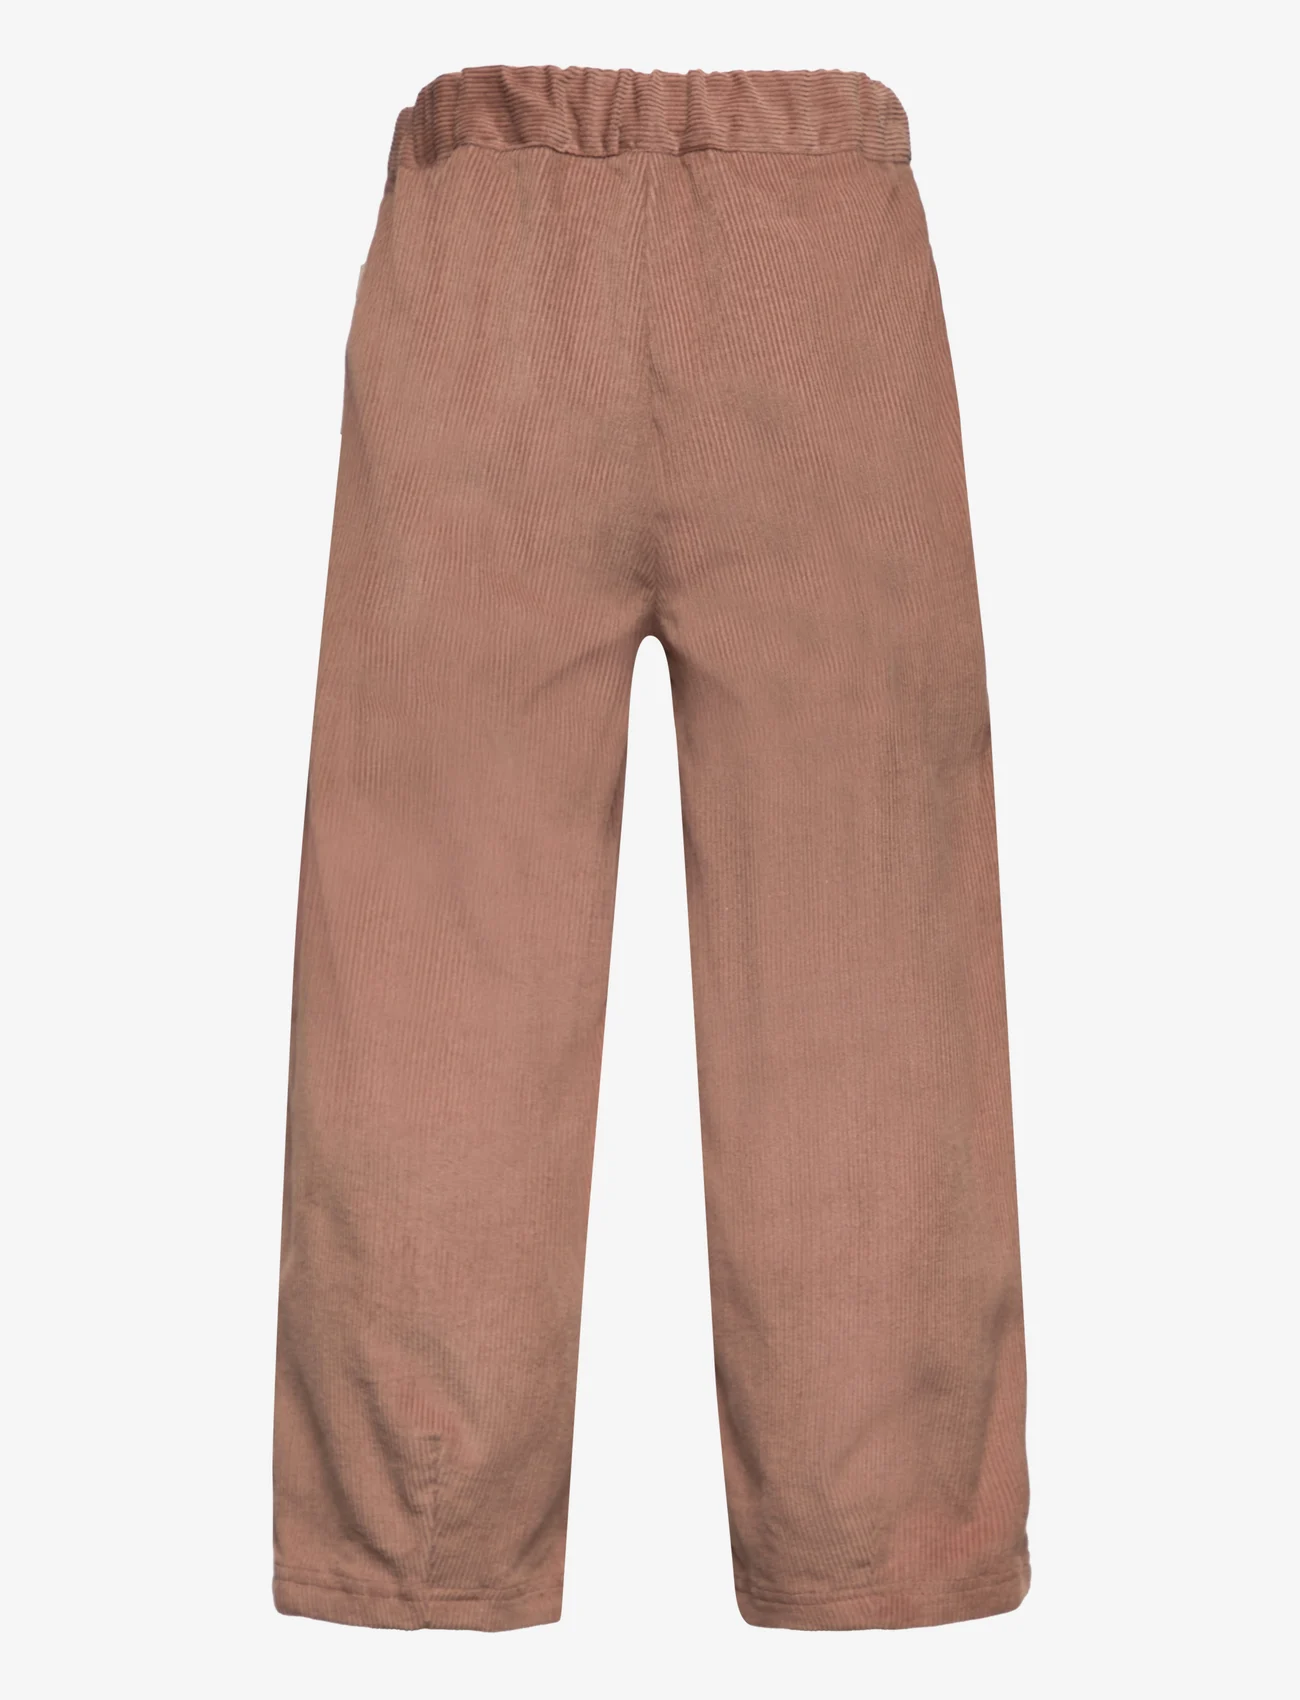 Wheat - Trousers Tricia Cropped - apatinės dalies apranga - berry dust - 1